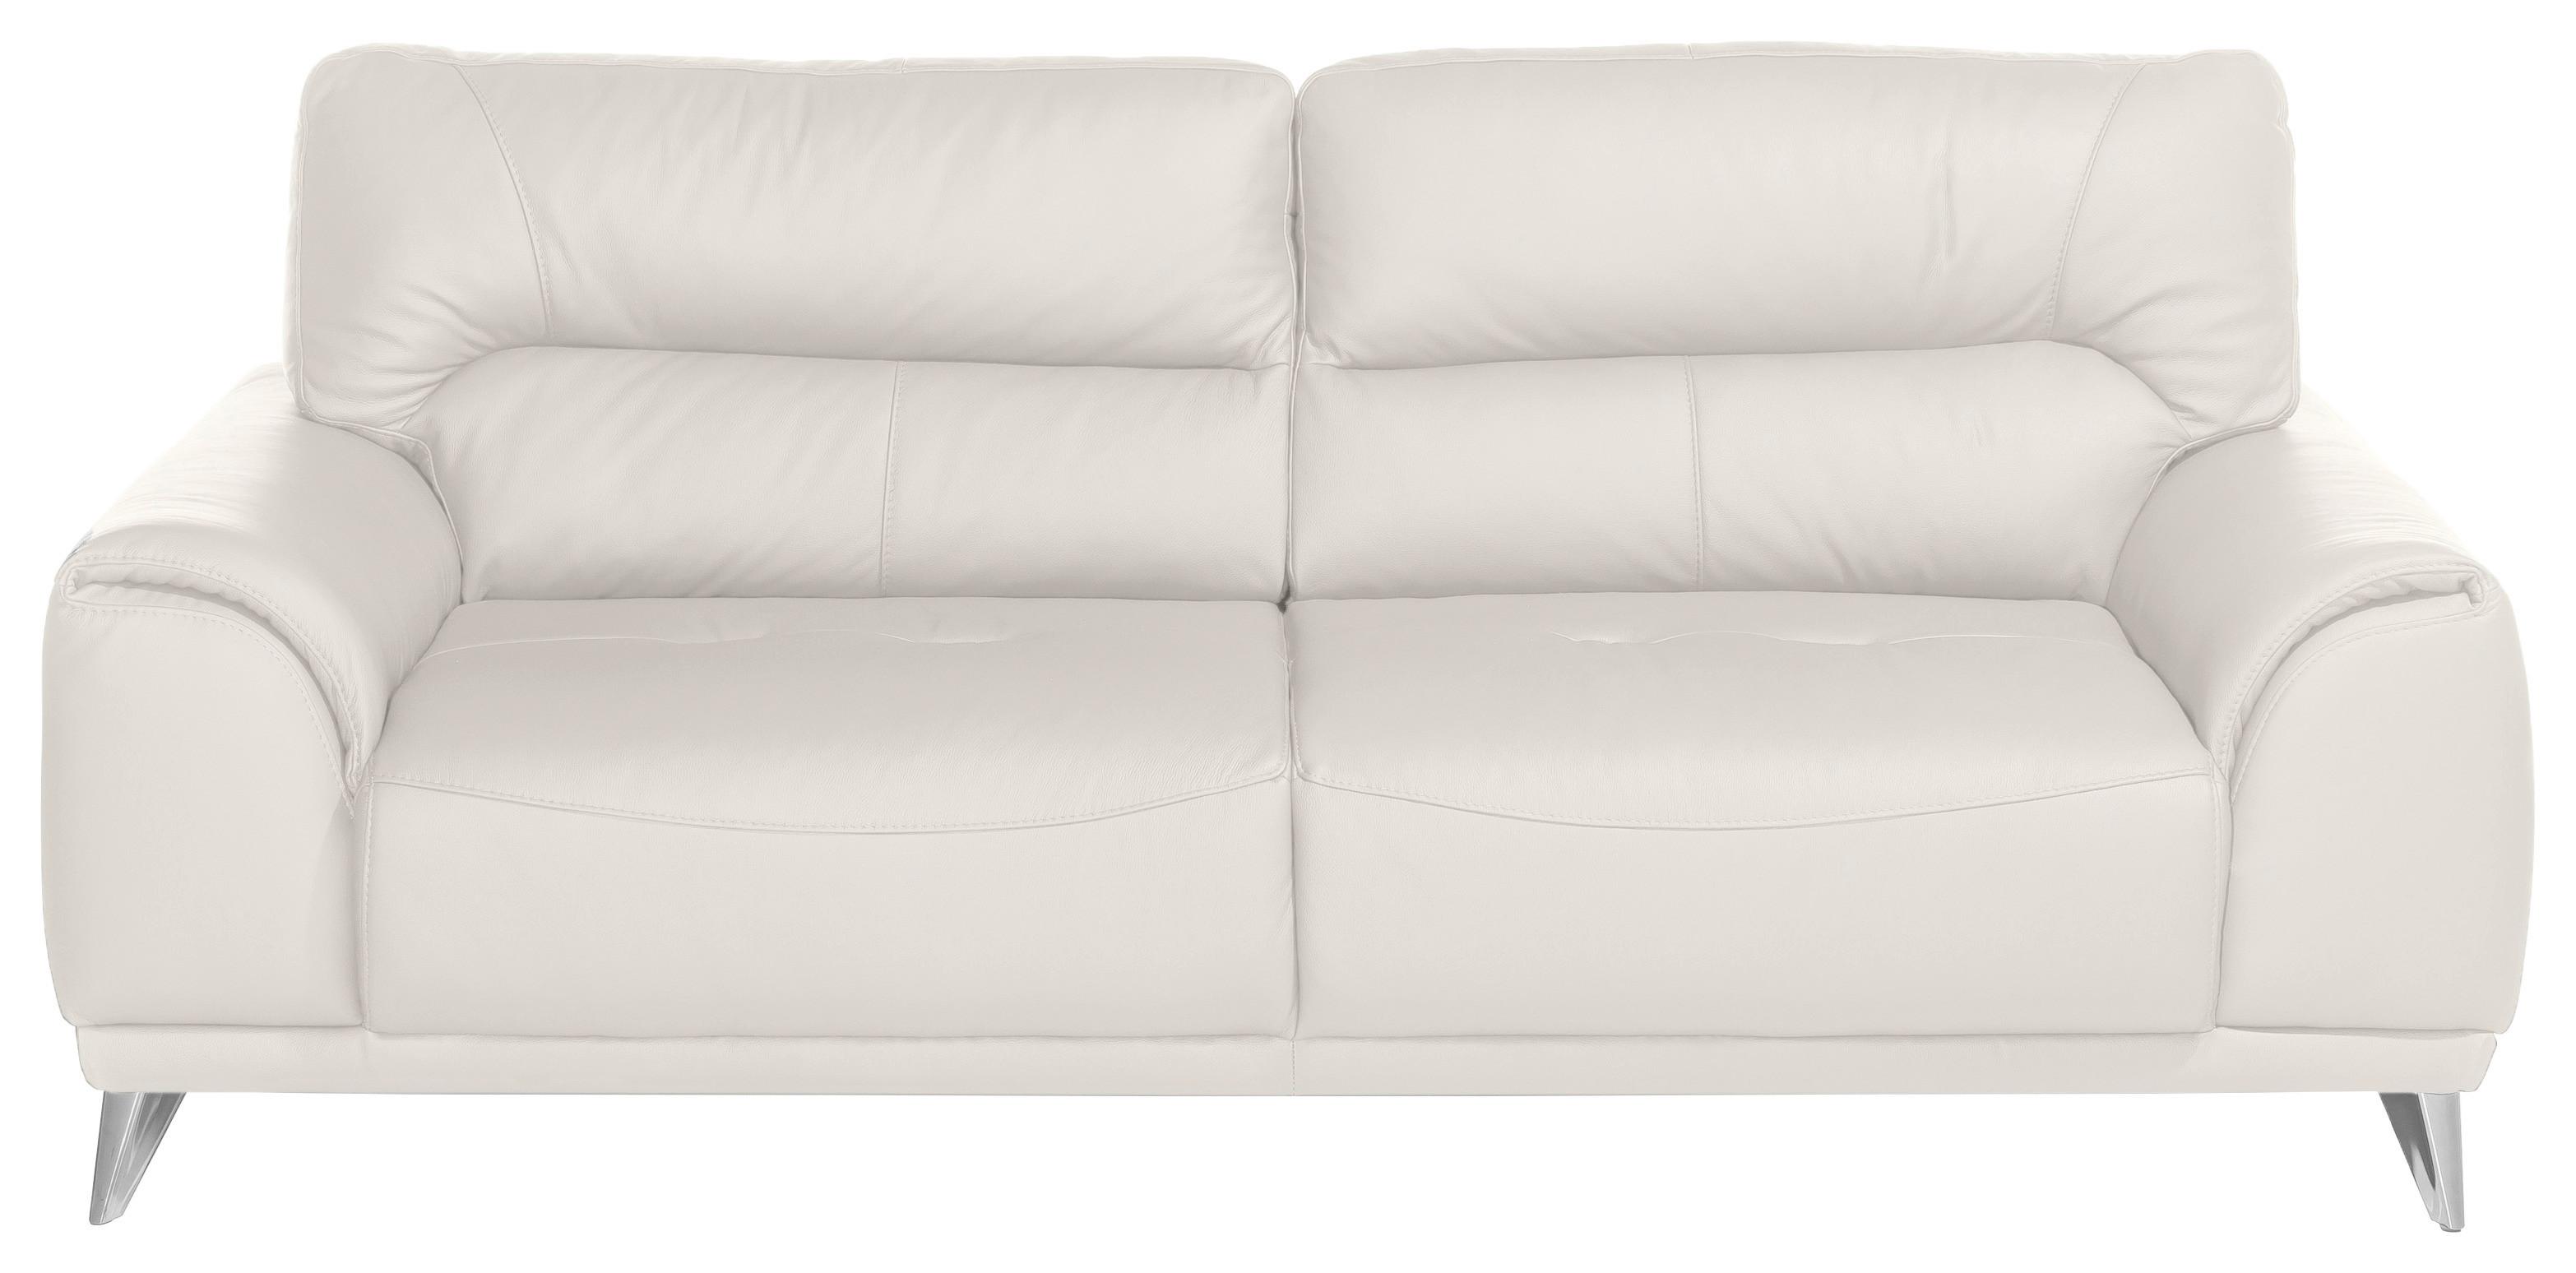 Dreisitzer-Sofa Frisco, Lederlook - Chromfarben/Weiß, MODERN, Textil (210/92/96cm) - MID.YOU